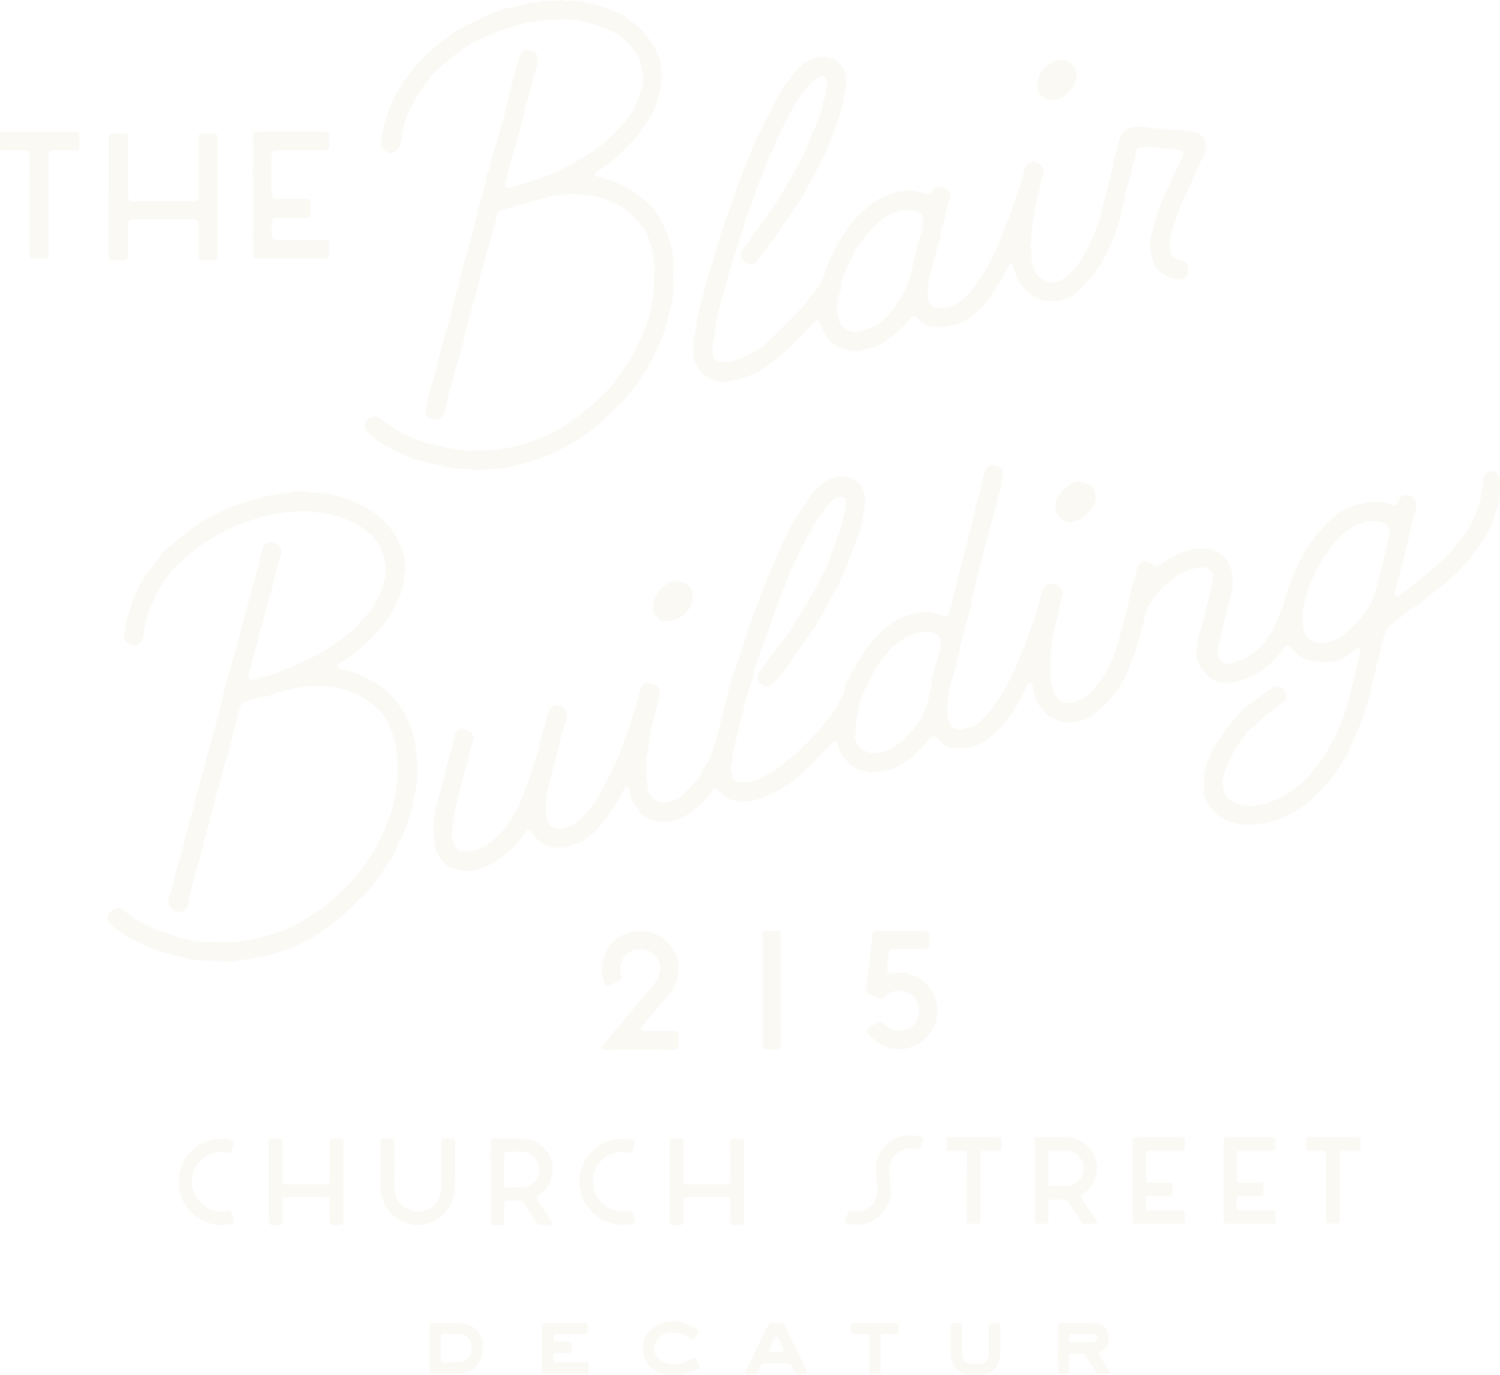 The Blair Building